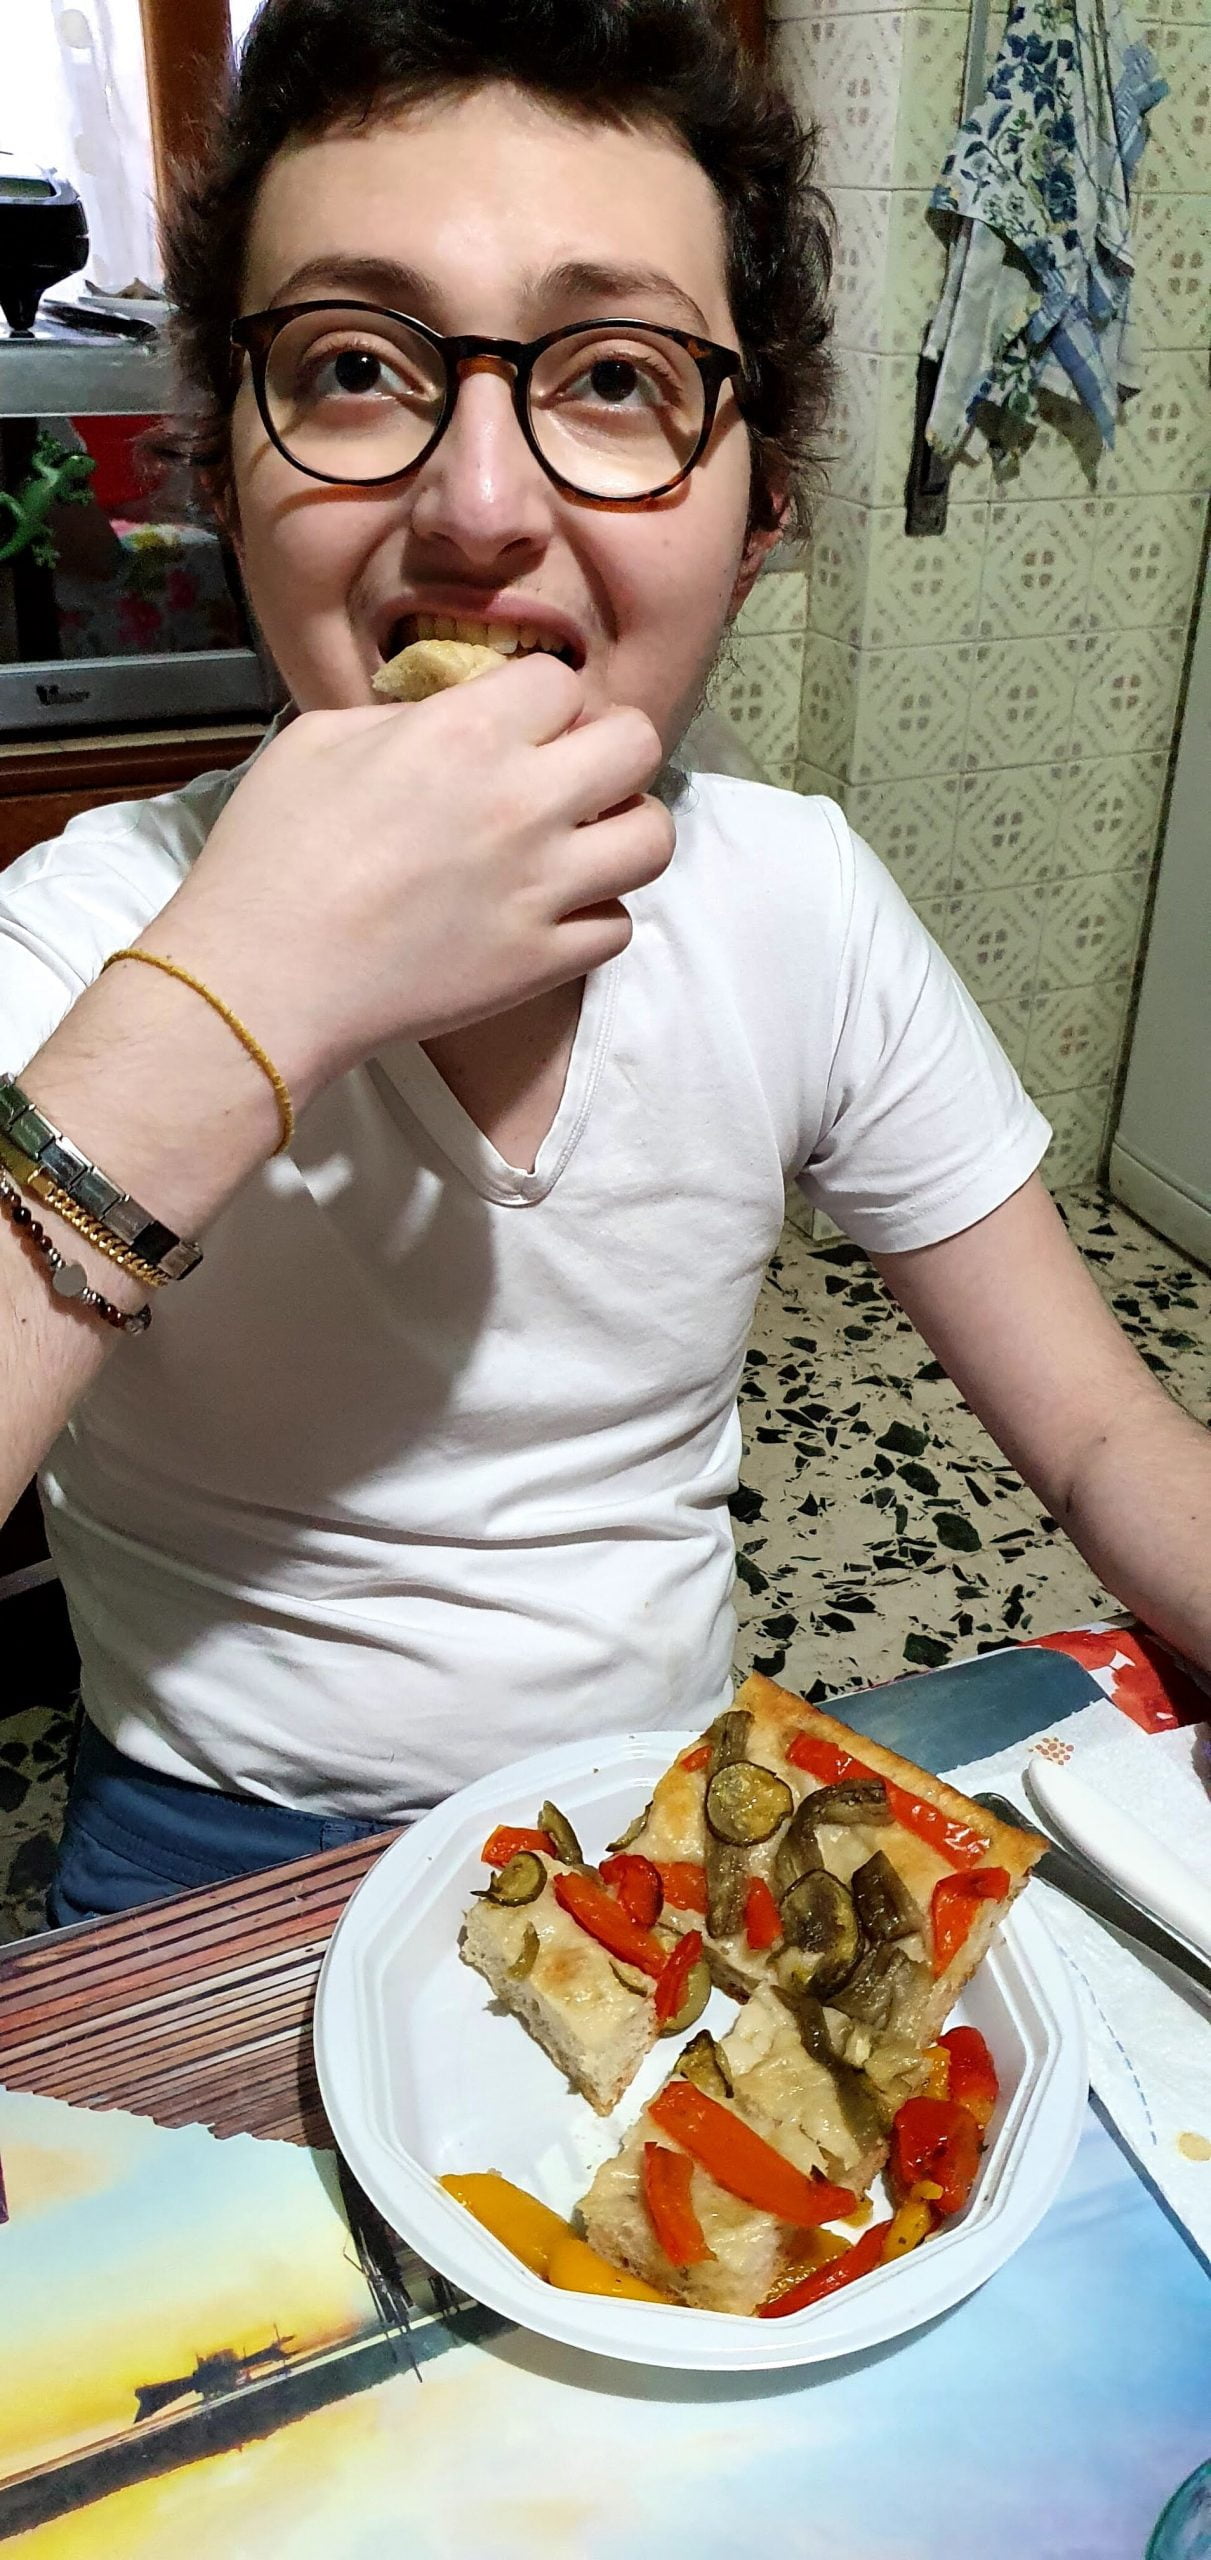 Eugène mange de la pizza